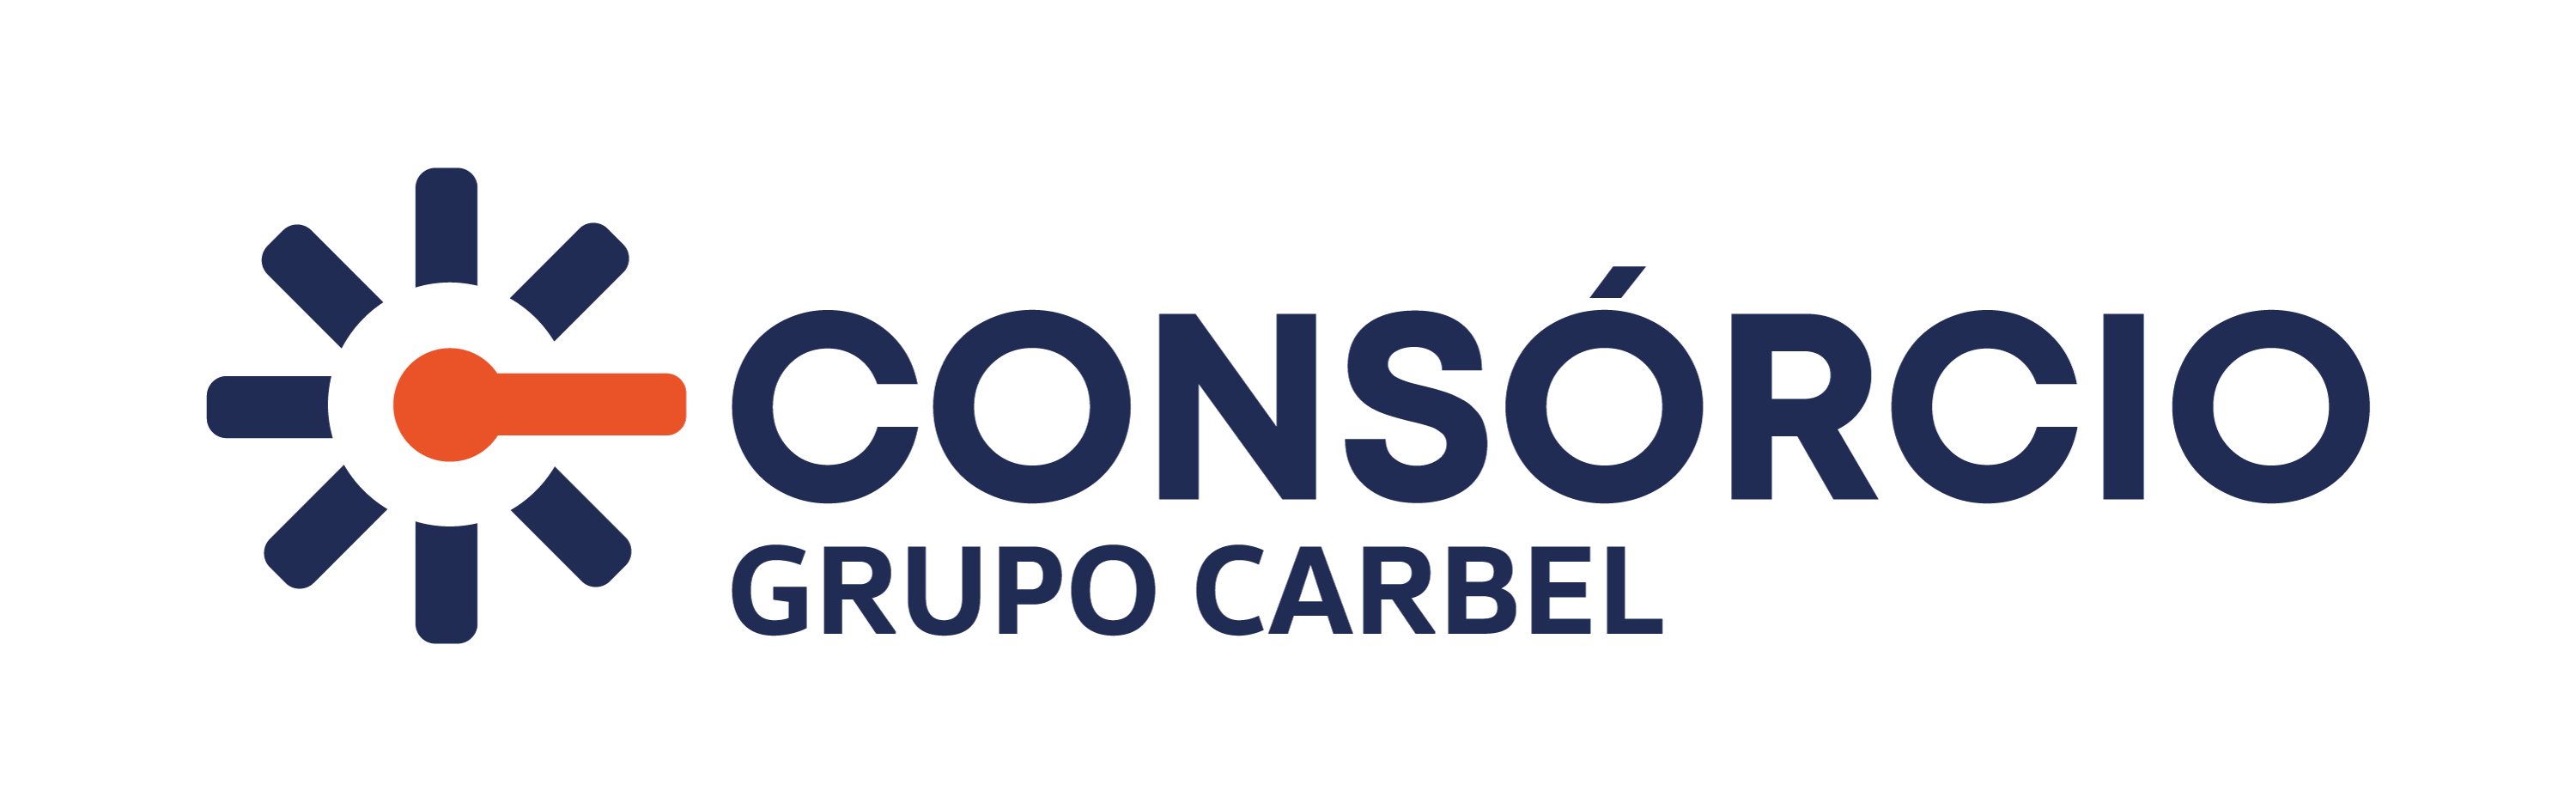 carbel logo